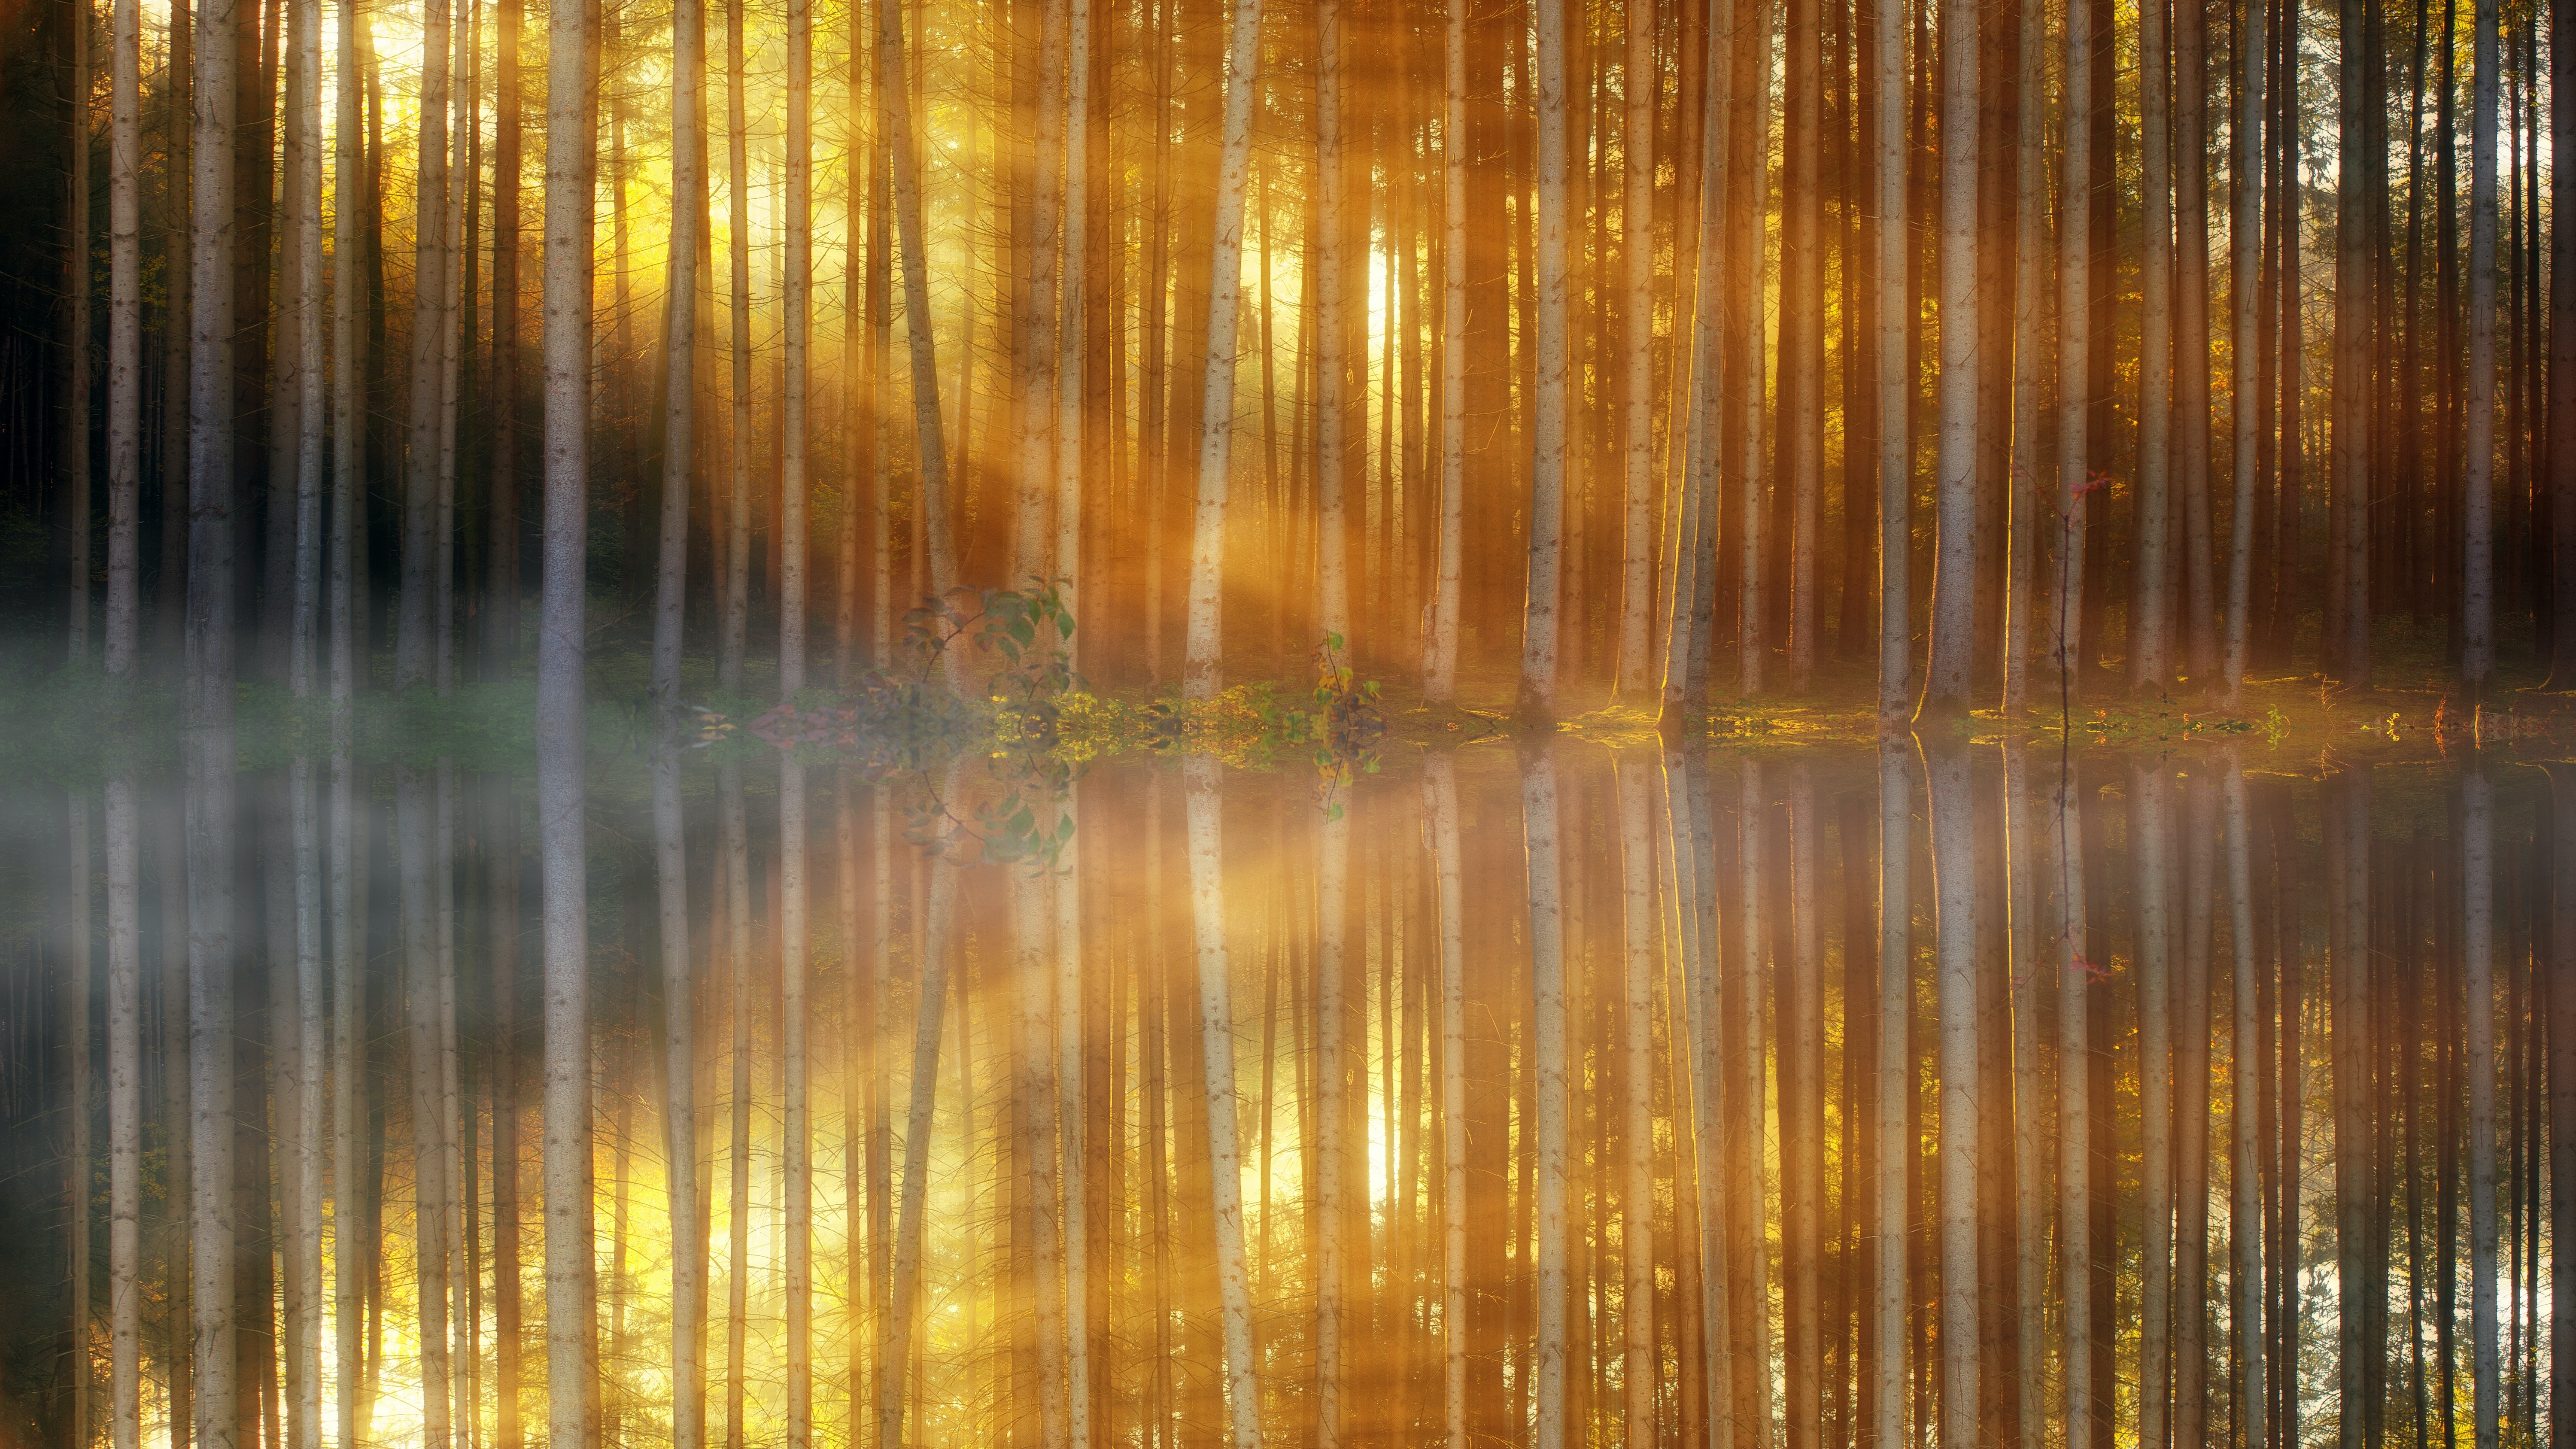 HD wallpaper, Body Of Water, Sunset, Sun Light, Woodland, Mist, Mirror Lake, 5K, Reflection, Forest Trees, Scenic